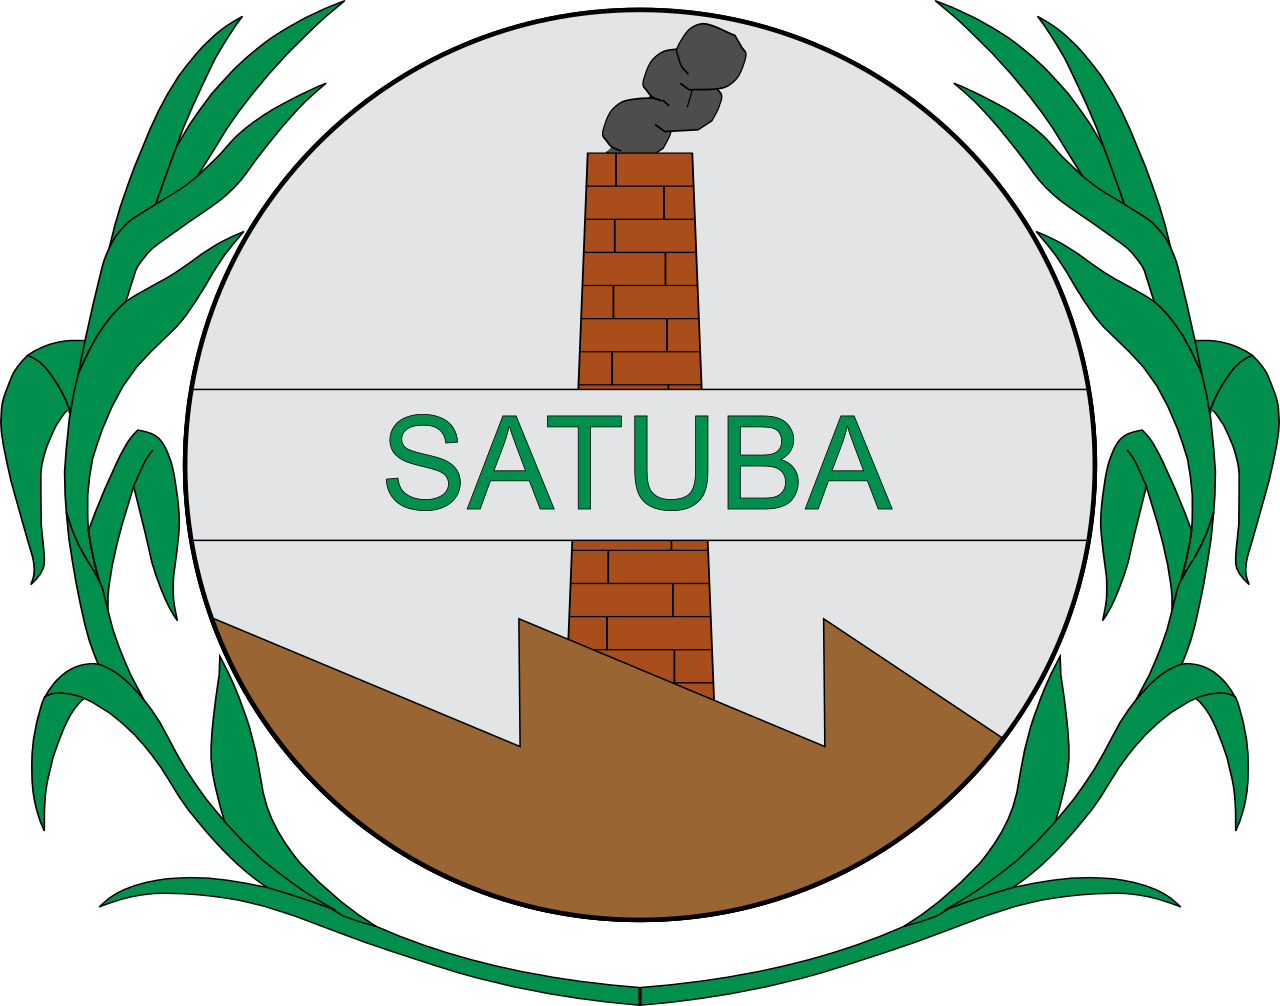 Satuba Of Spanish Wikipedia Arms Flag Coat Clipart